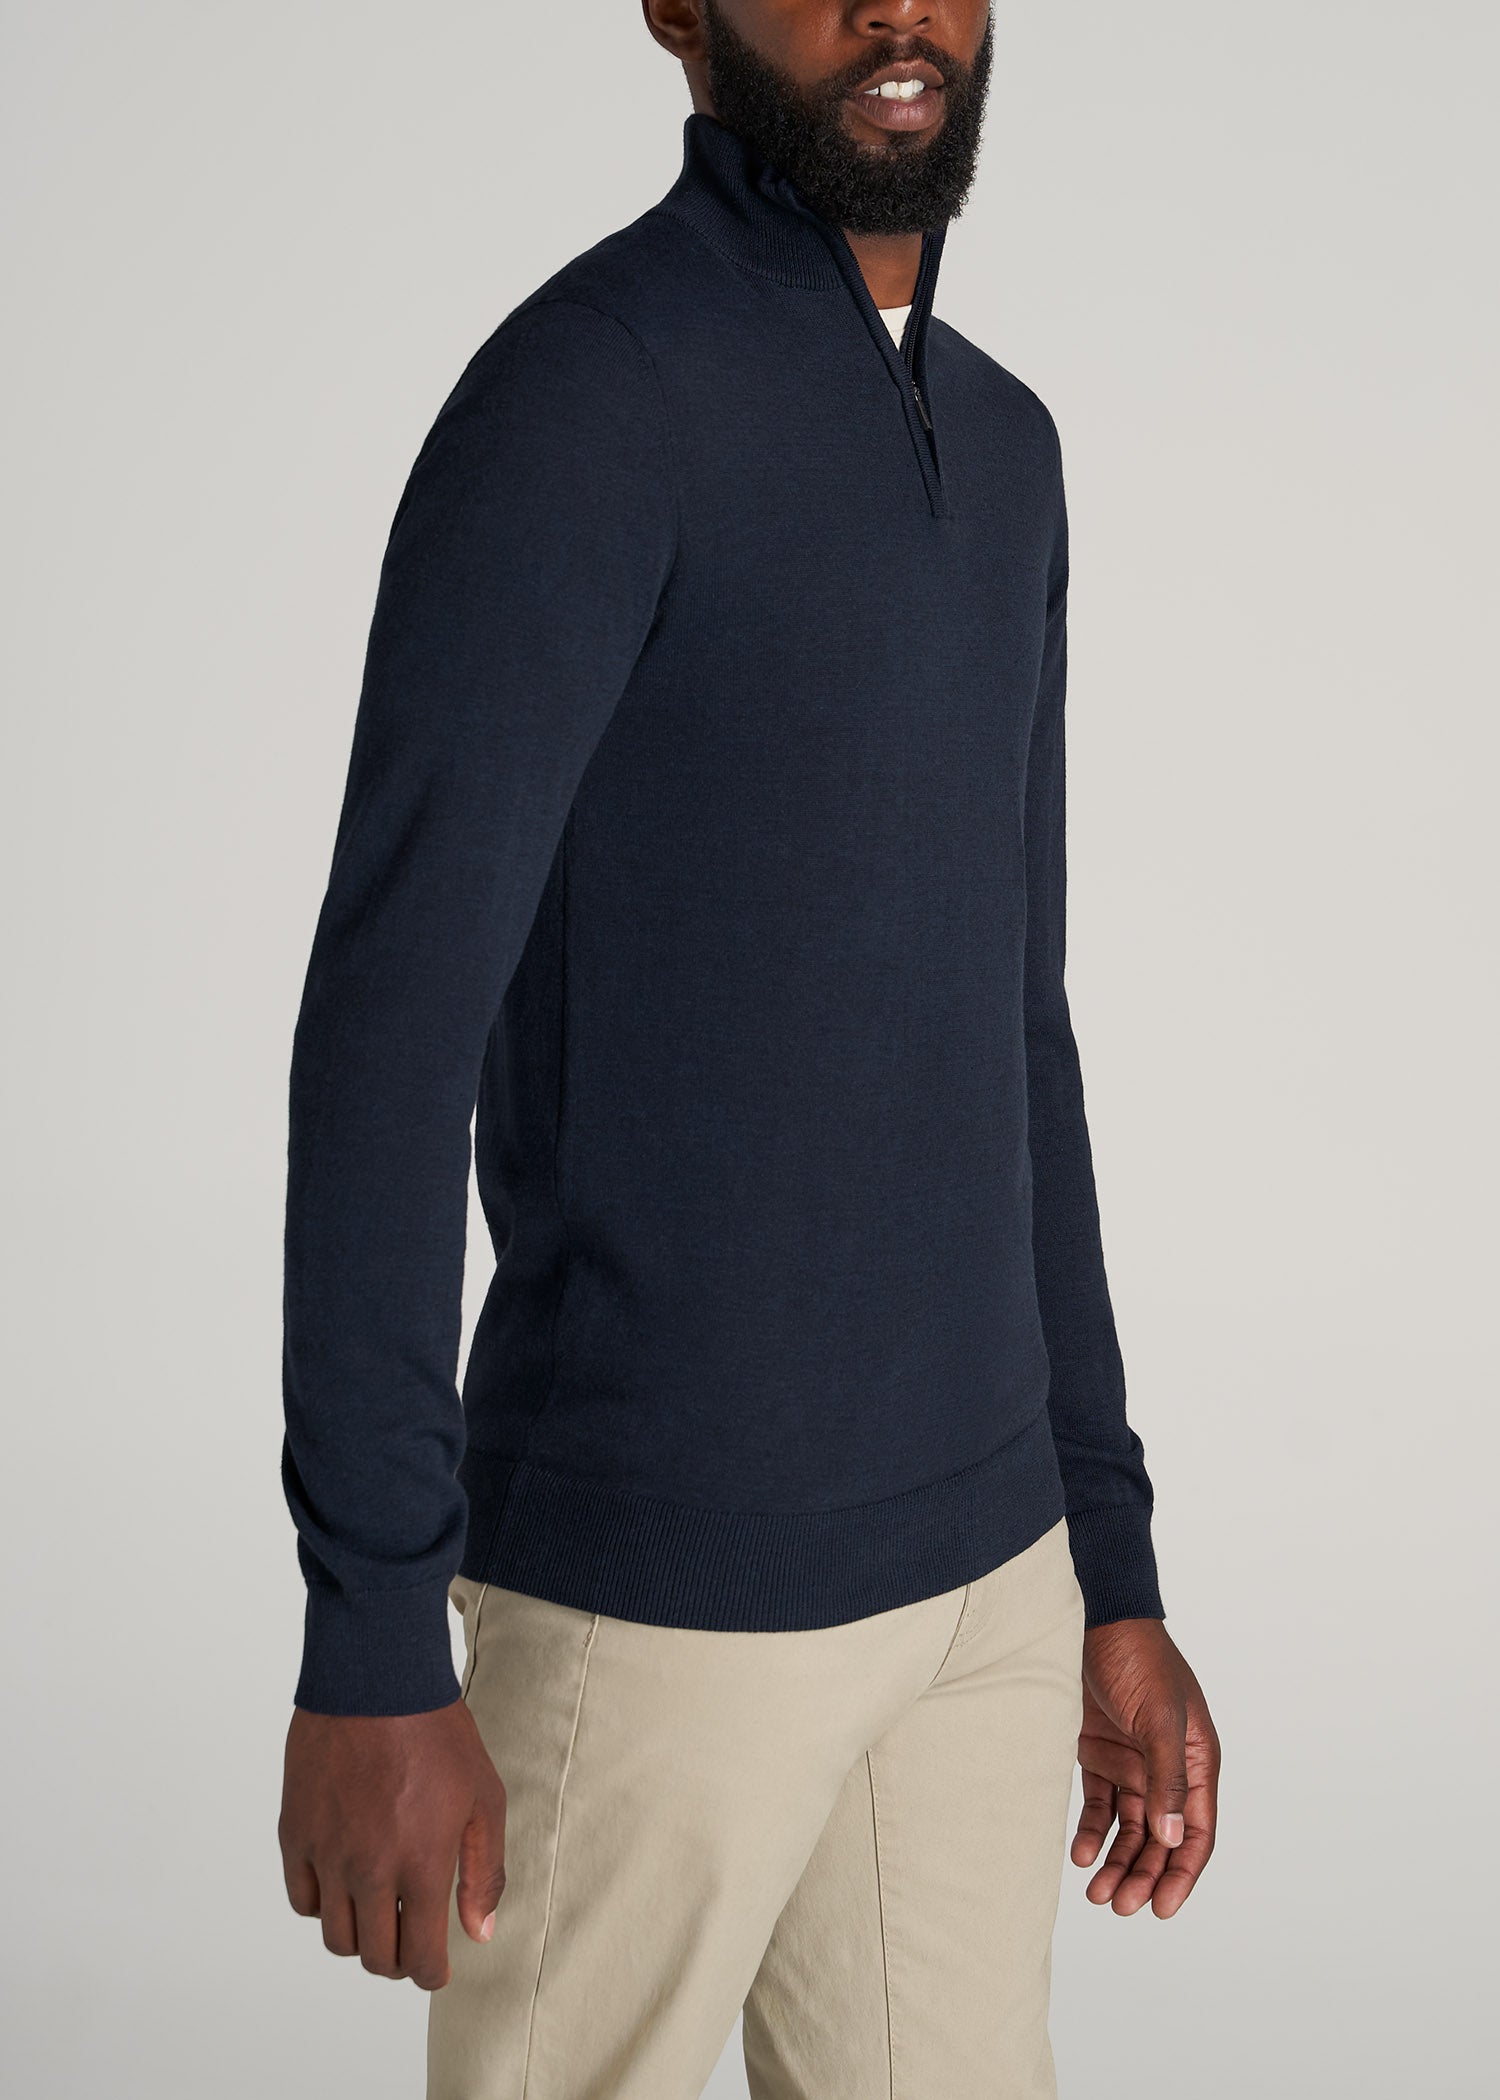 Men's Tall Patriot Blue Quarter Zip Sweater | American Tall